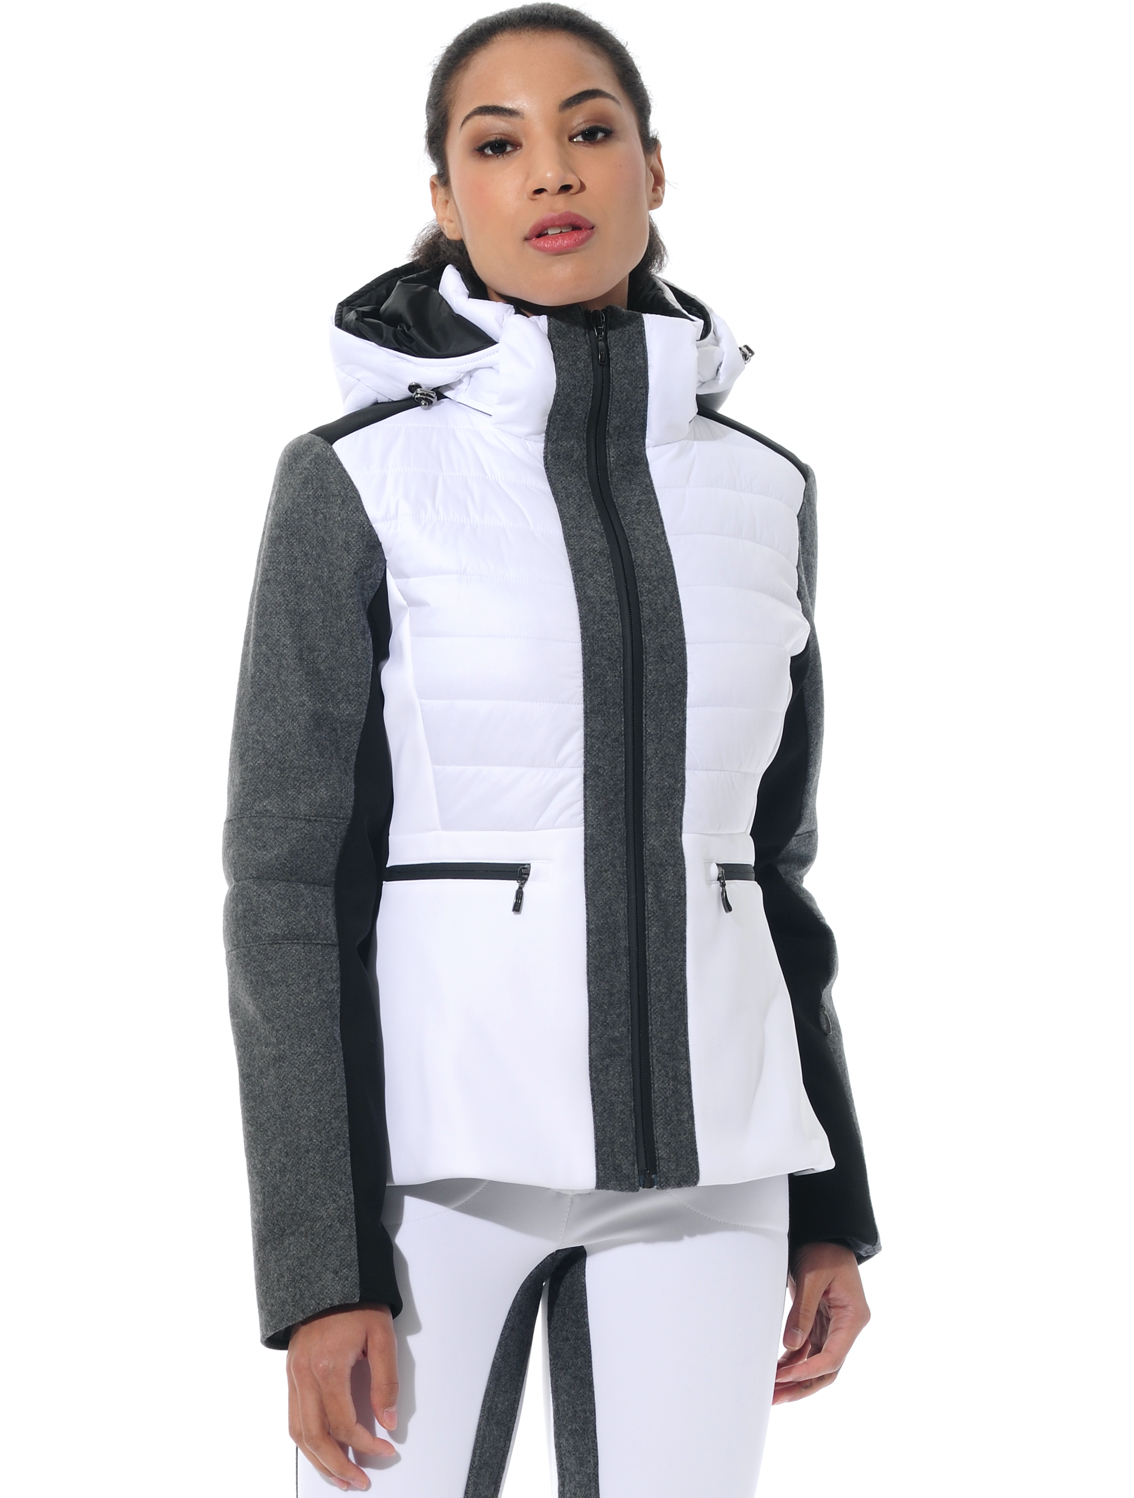 stretch ski jacket with loden details white/grey 